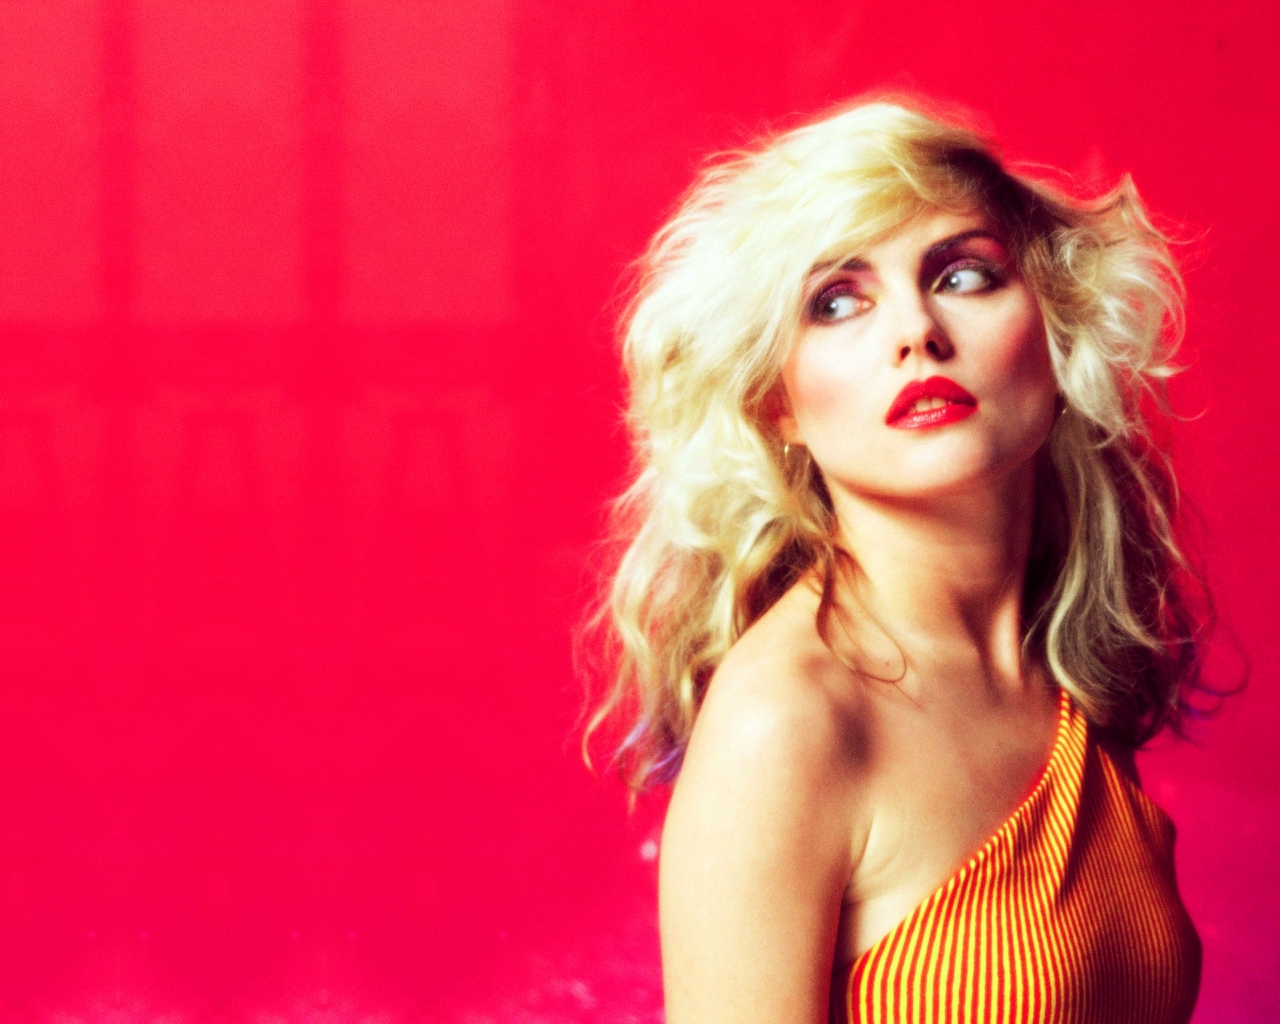 blondie wallpaper,hair,blond,beauty,red,fashion model